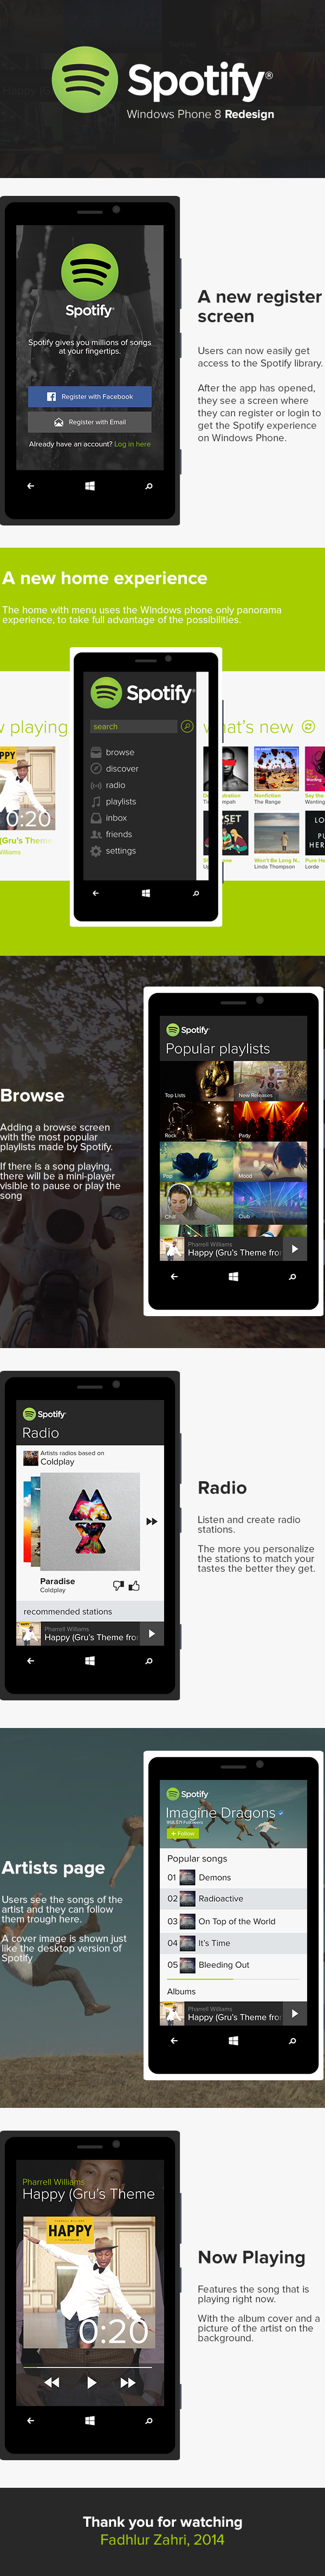 Spotify Windows Phone 8 App